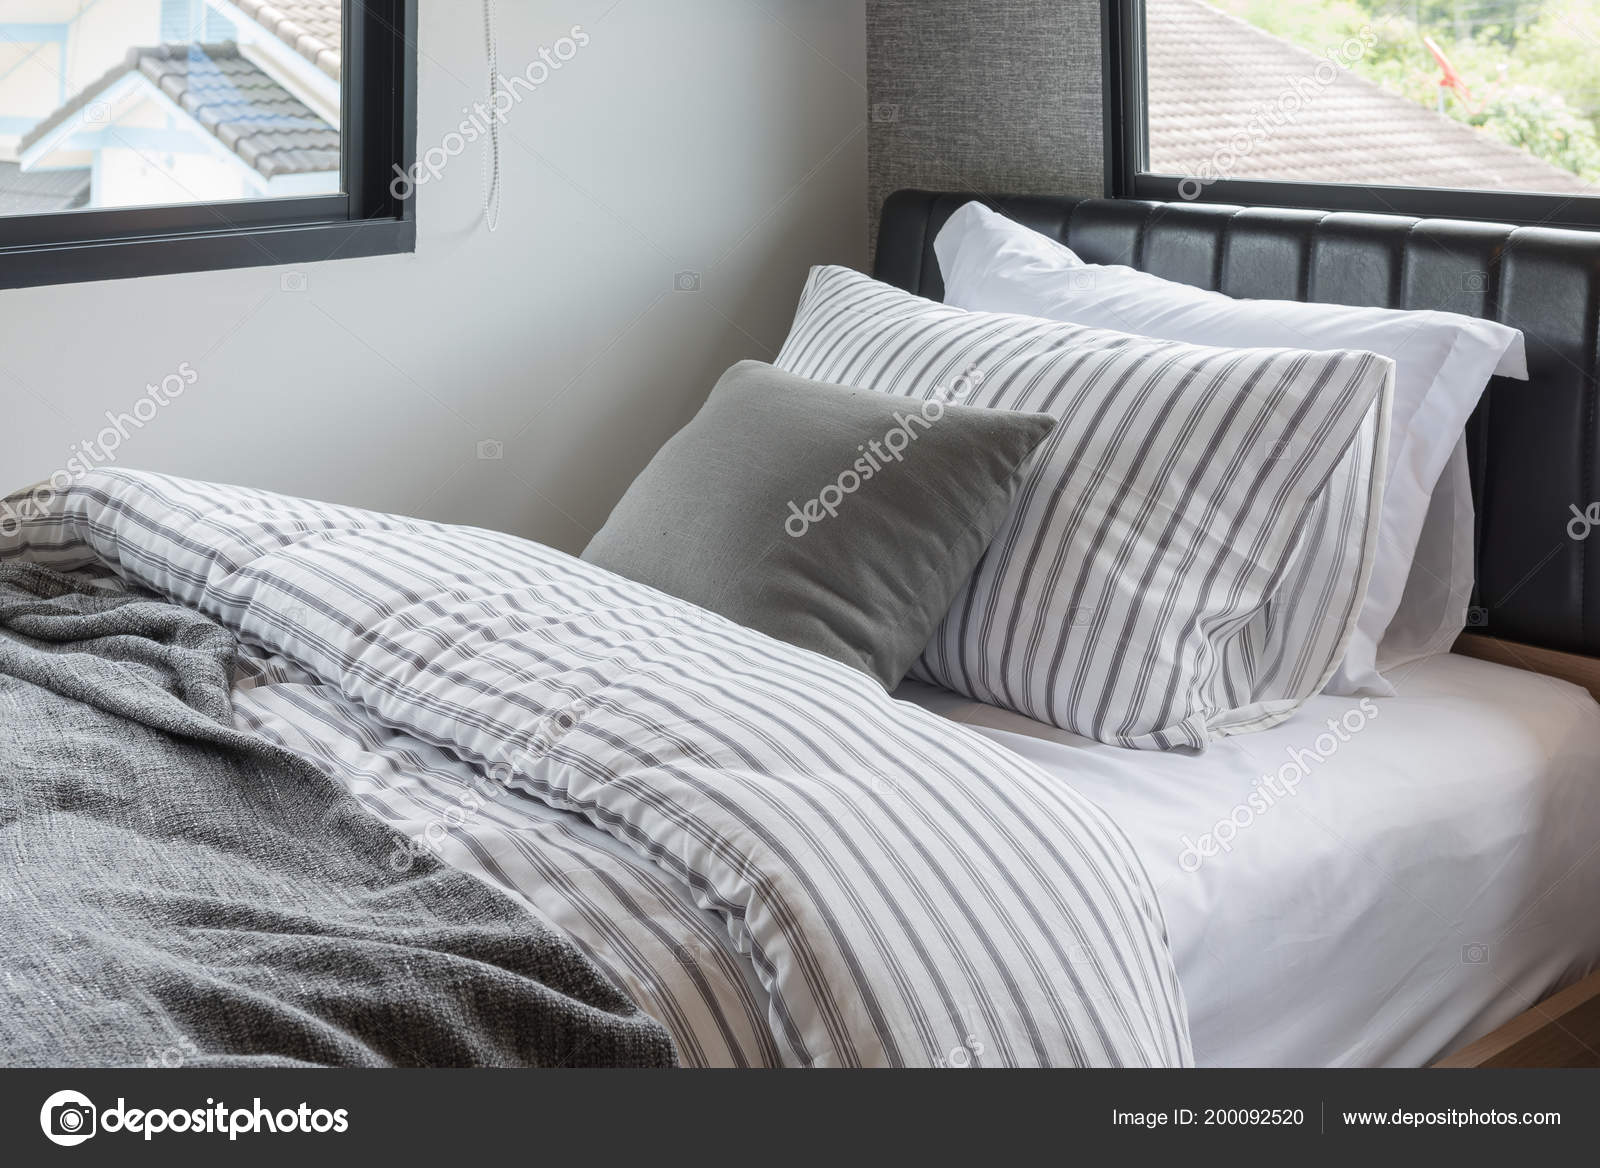 https://st4.depositphotos.com/4221109/20009/i/1600/depositphotos_200092520-stock-photo-single-bed-modern-bedroom-set.jpg